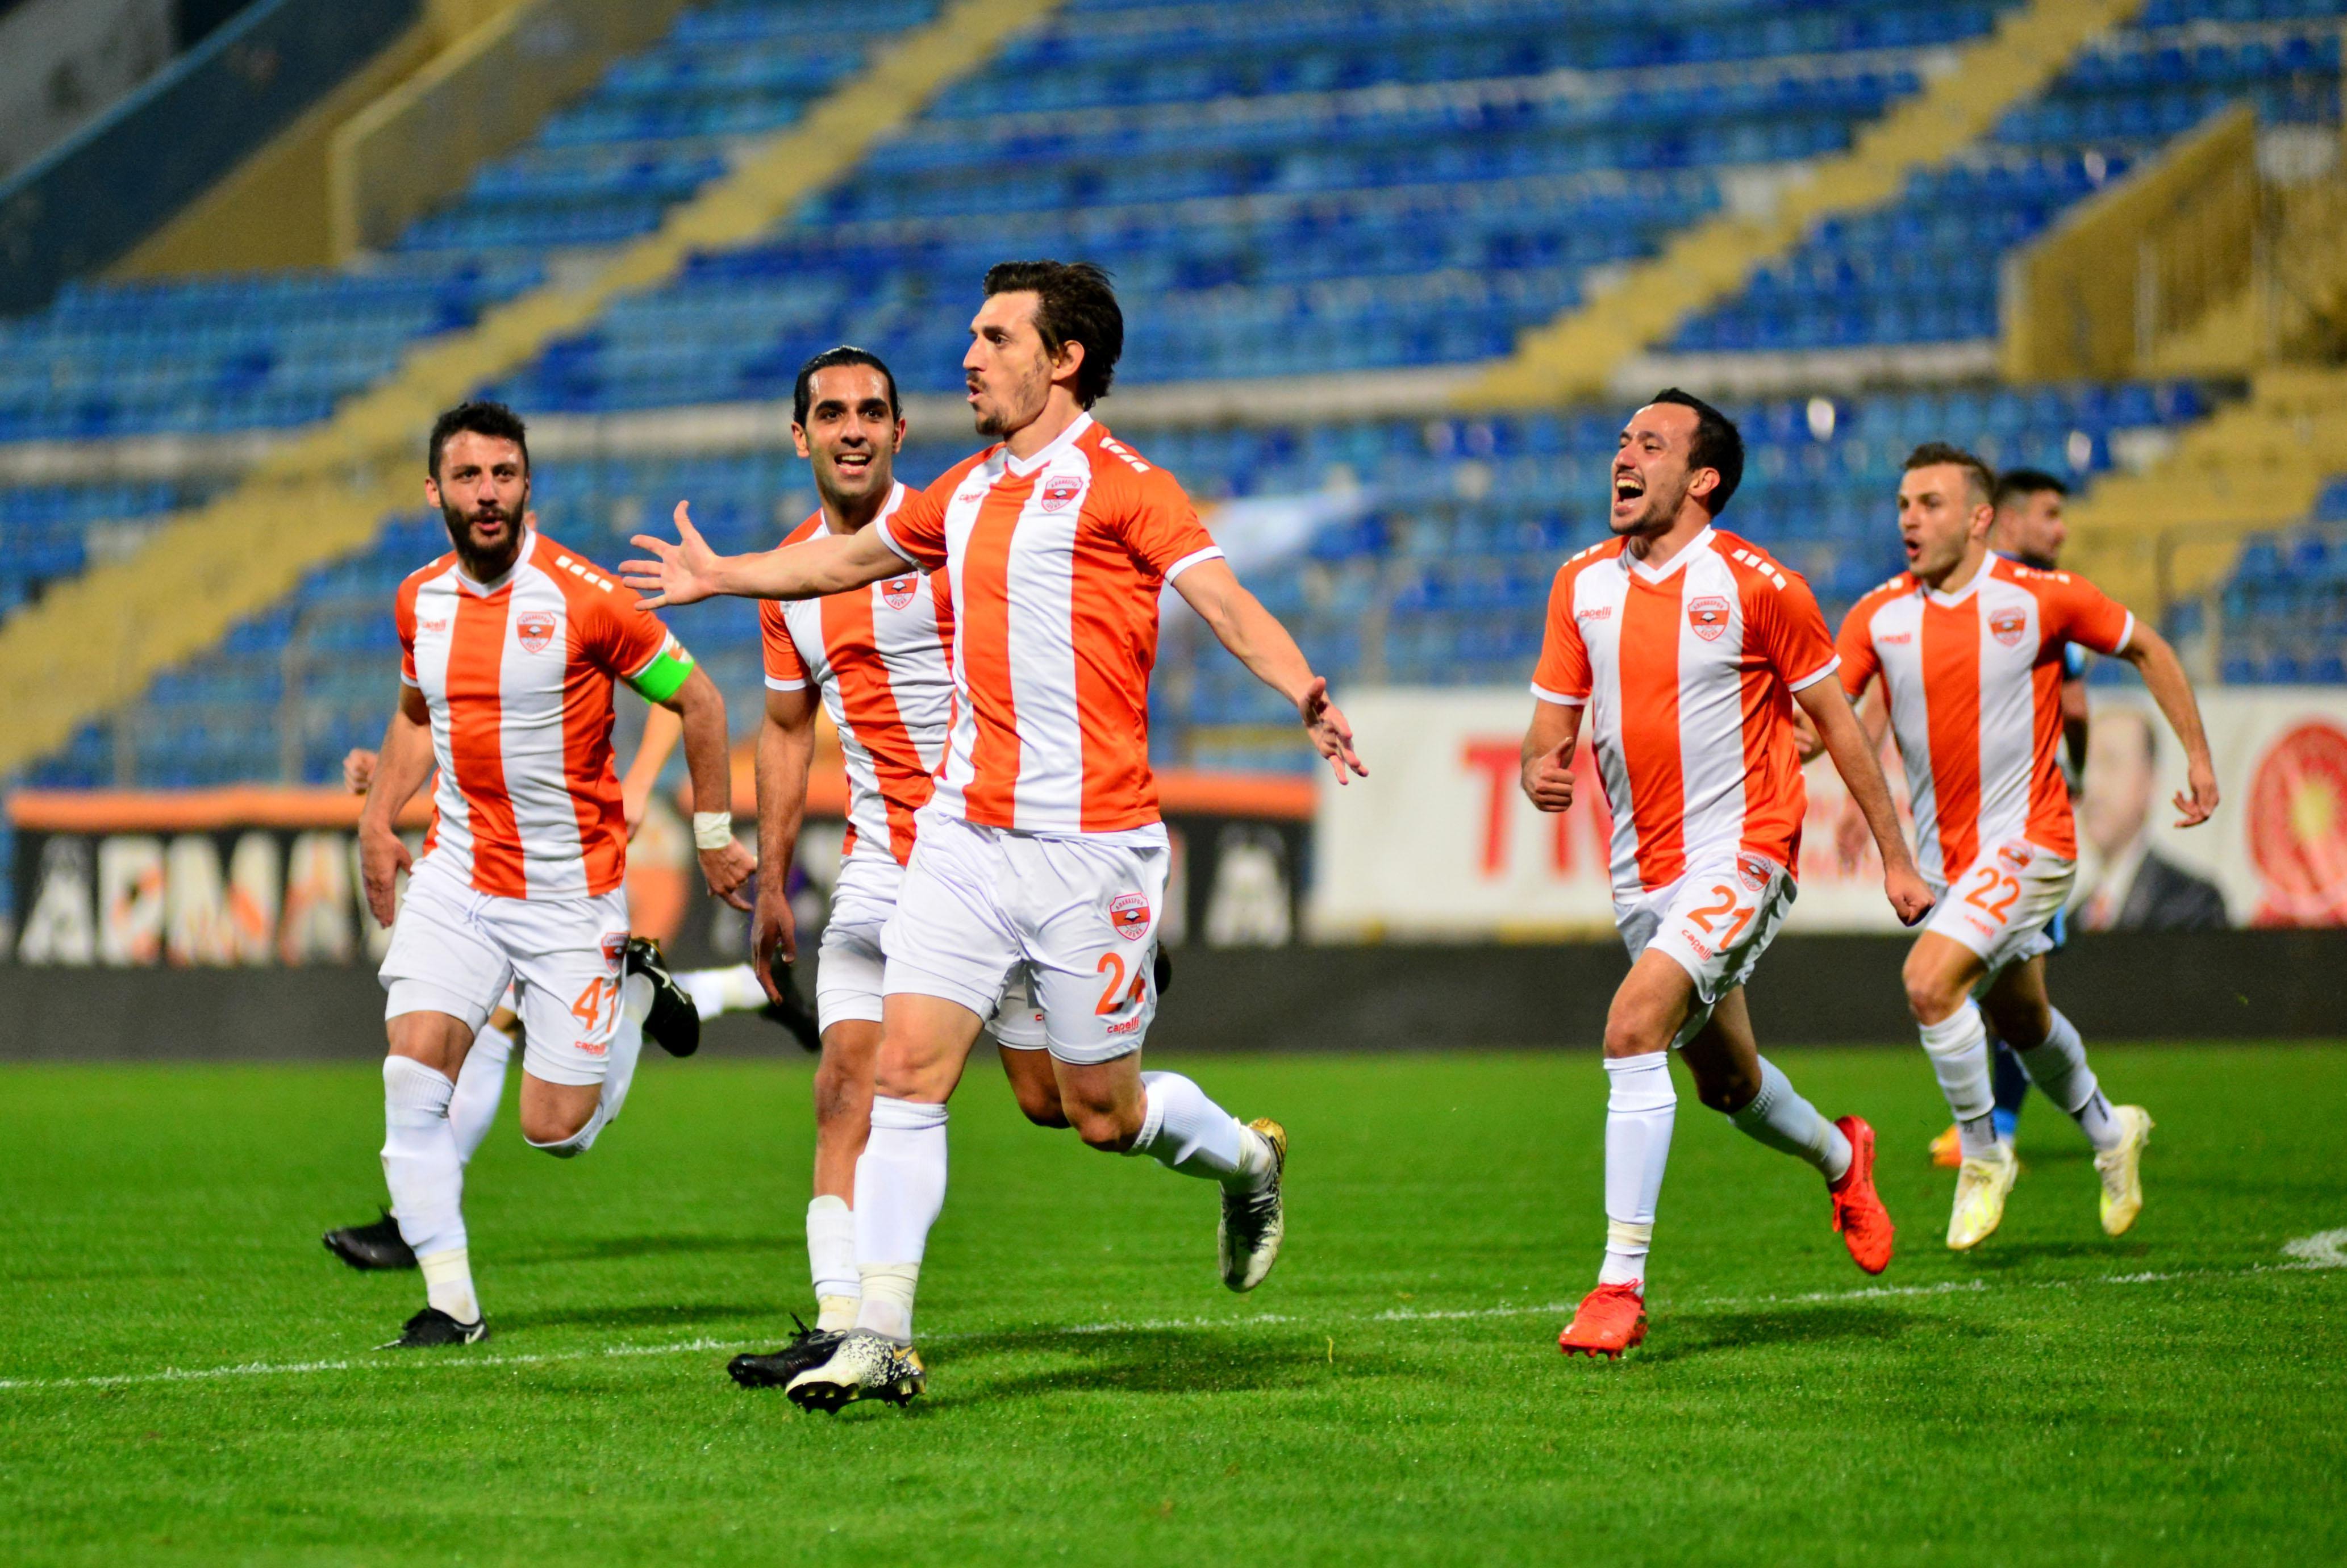 (ÖZET) Adanaspor - Adana Demirspor maç sonucu: 2-2